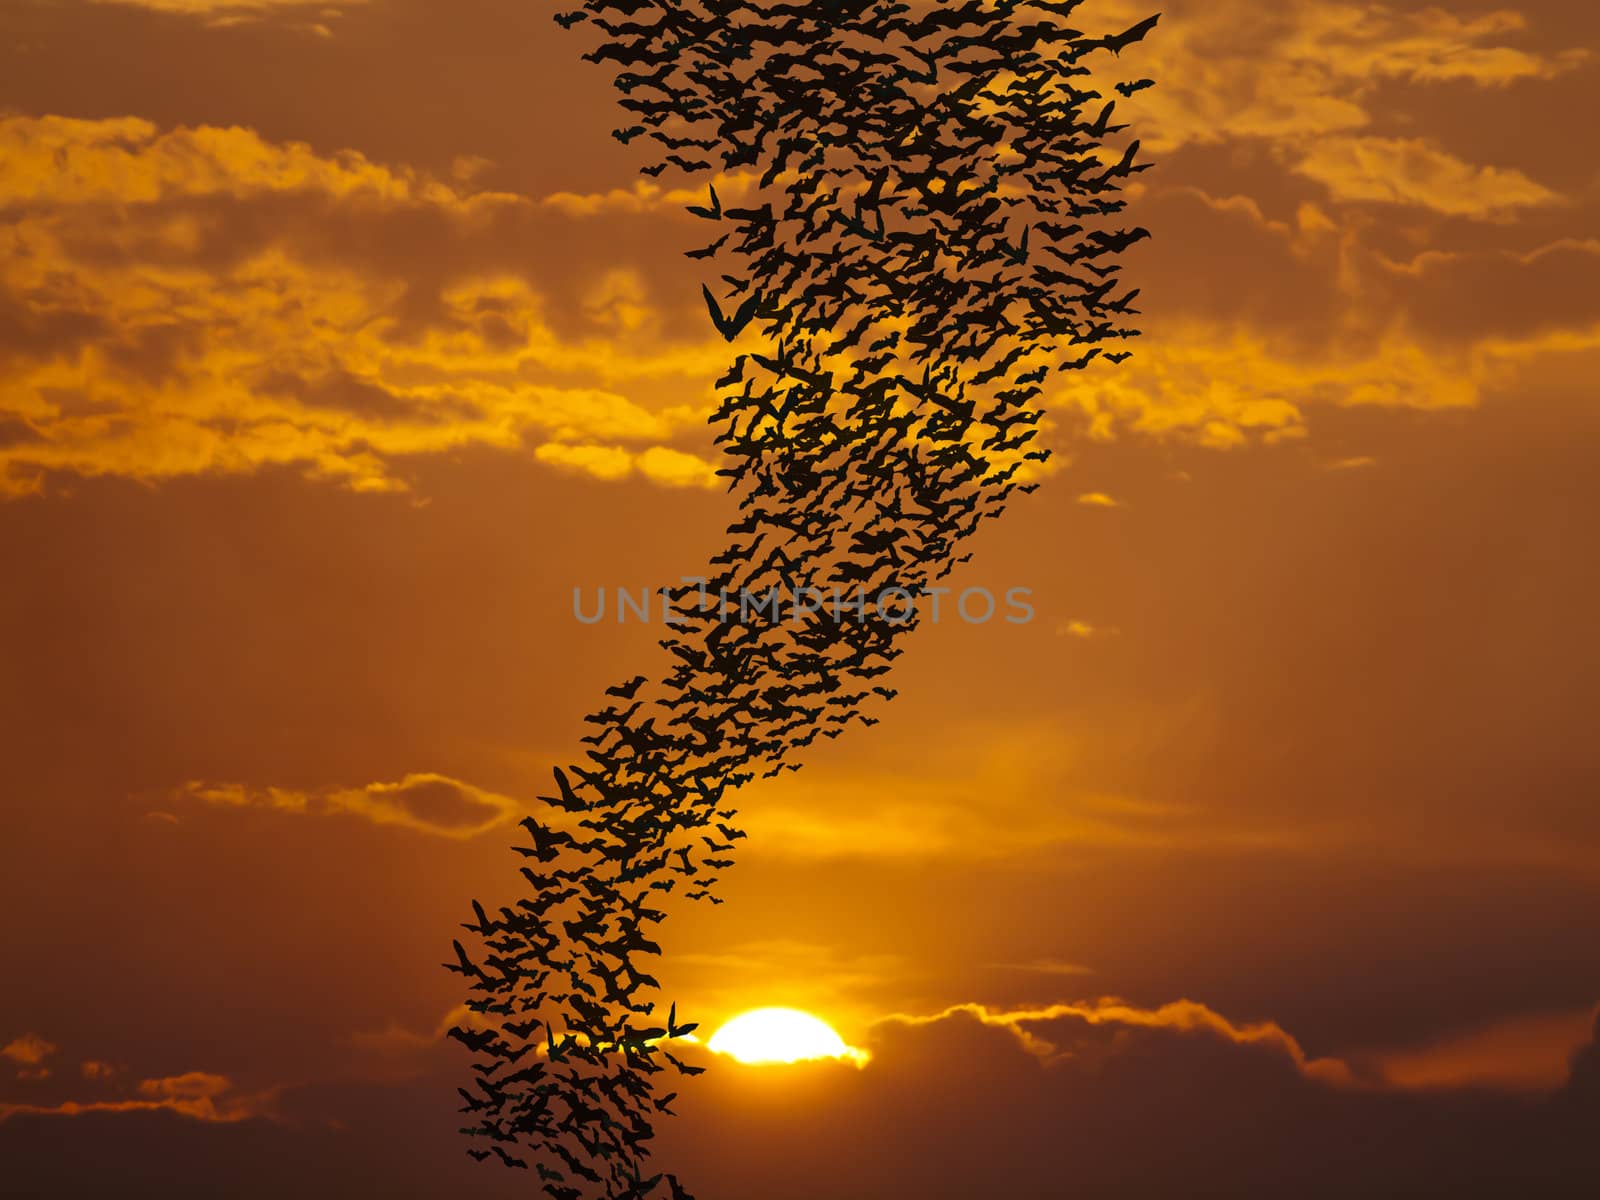 Bats flying againt sun by Exsodus